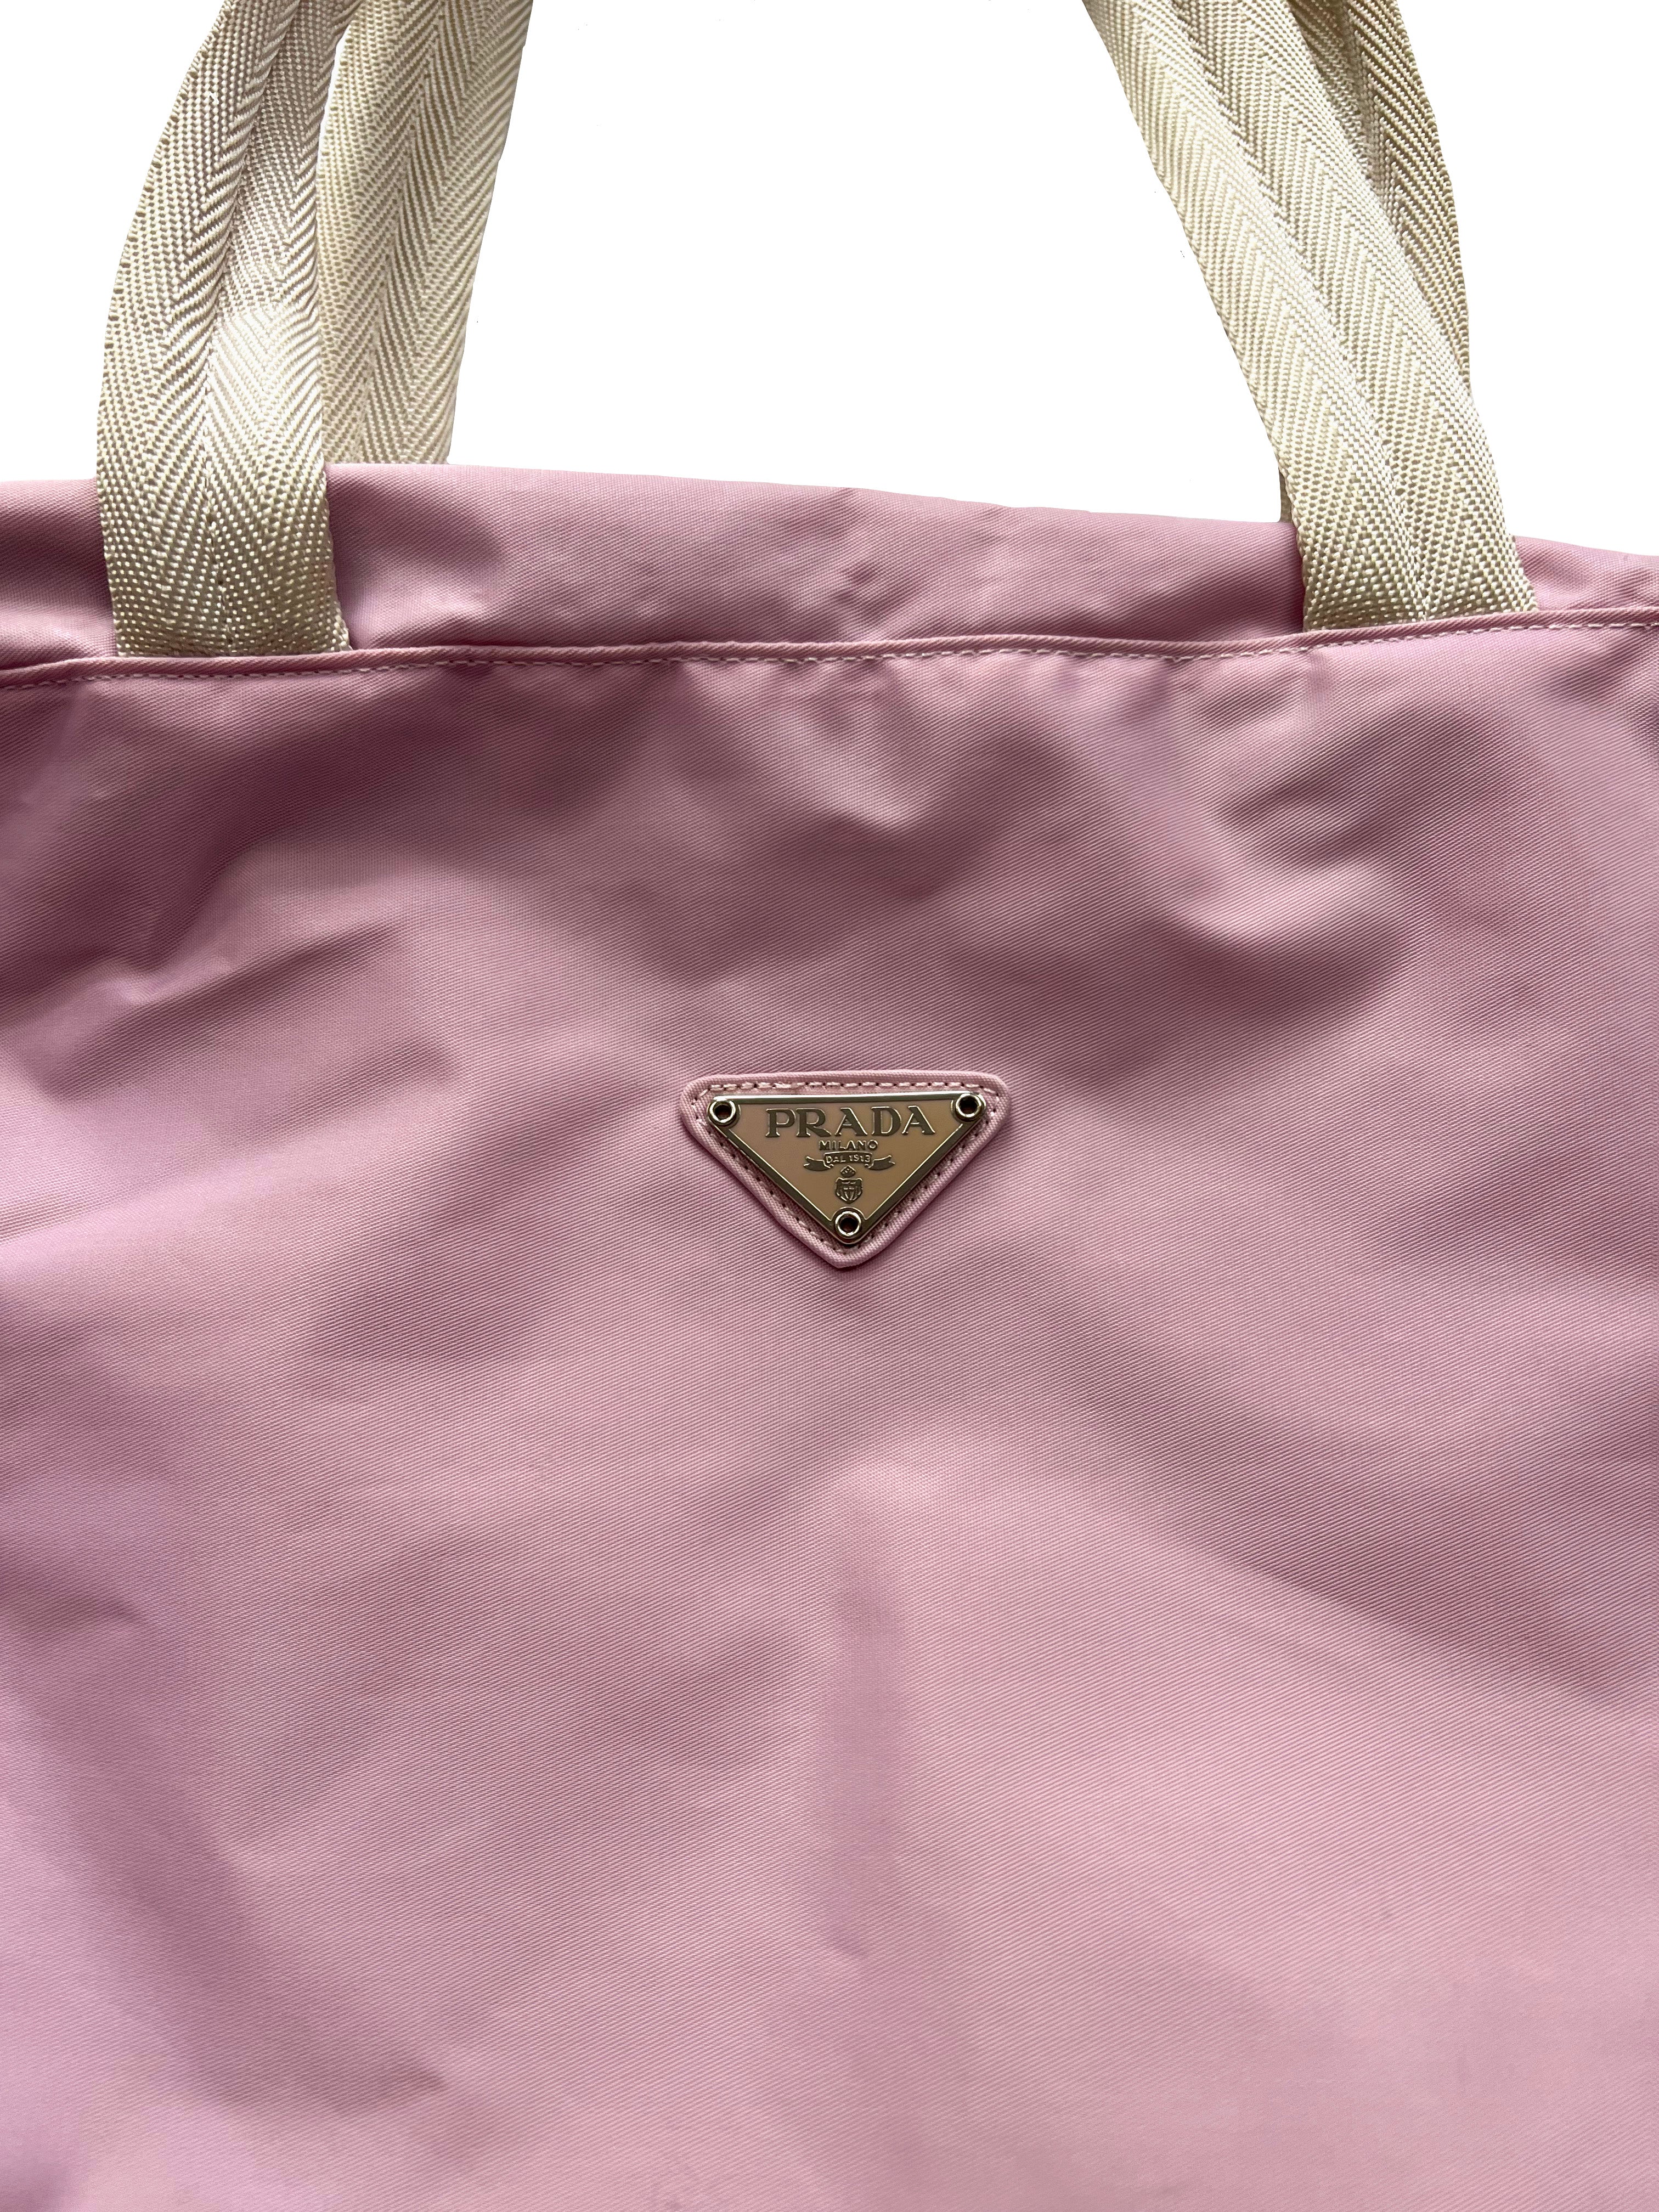 Prada Milano Baby Pink Handbag 2003